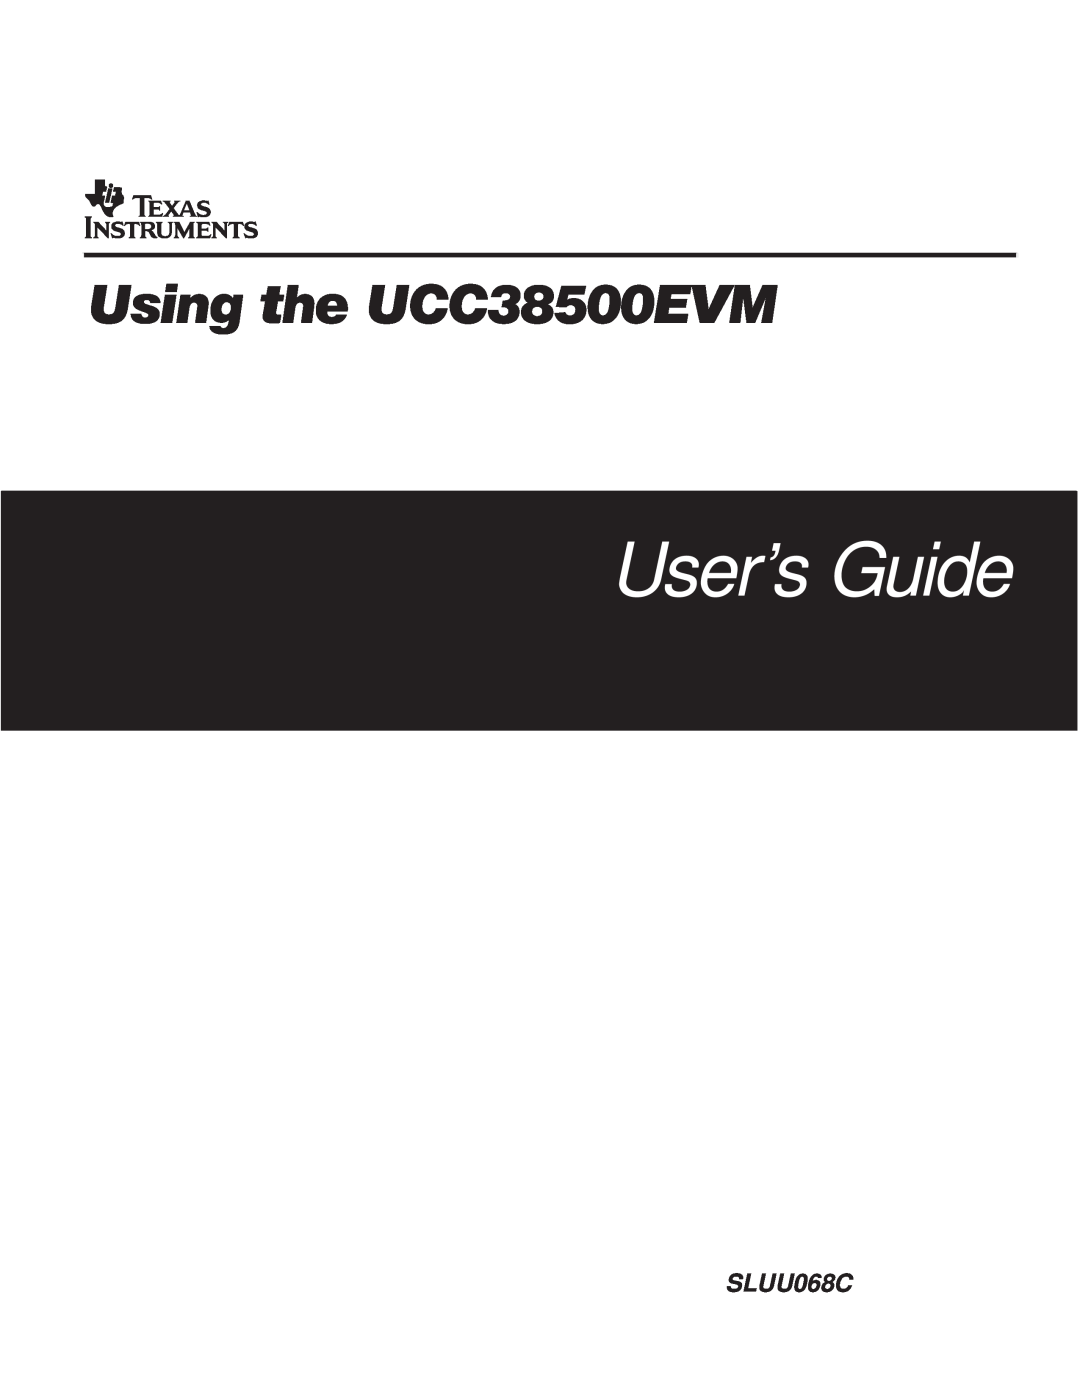 Texas Instruments manual User’s Guide, Using the UCC38500EVM, SLUU068C 